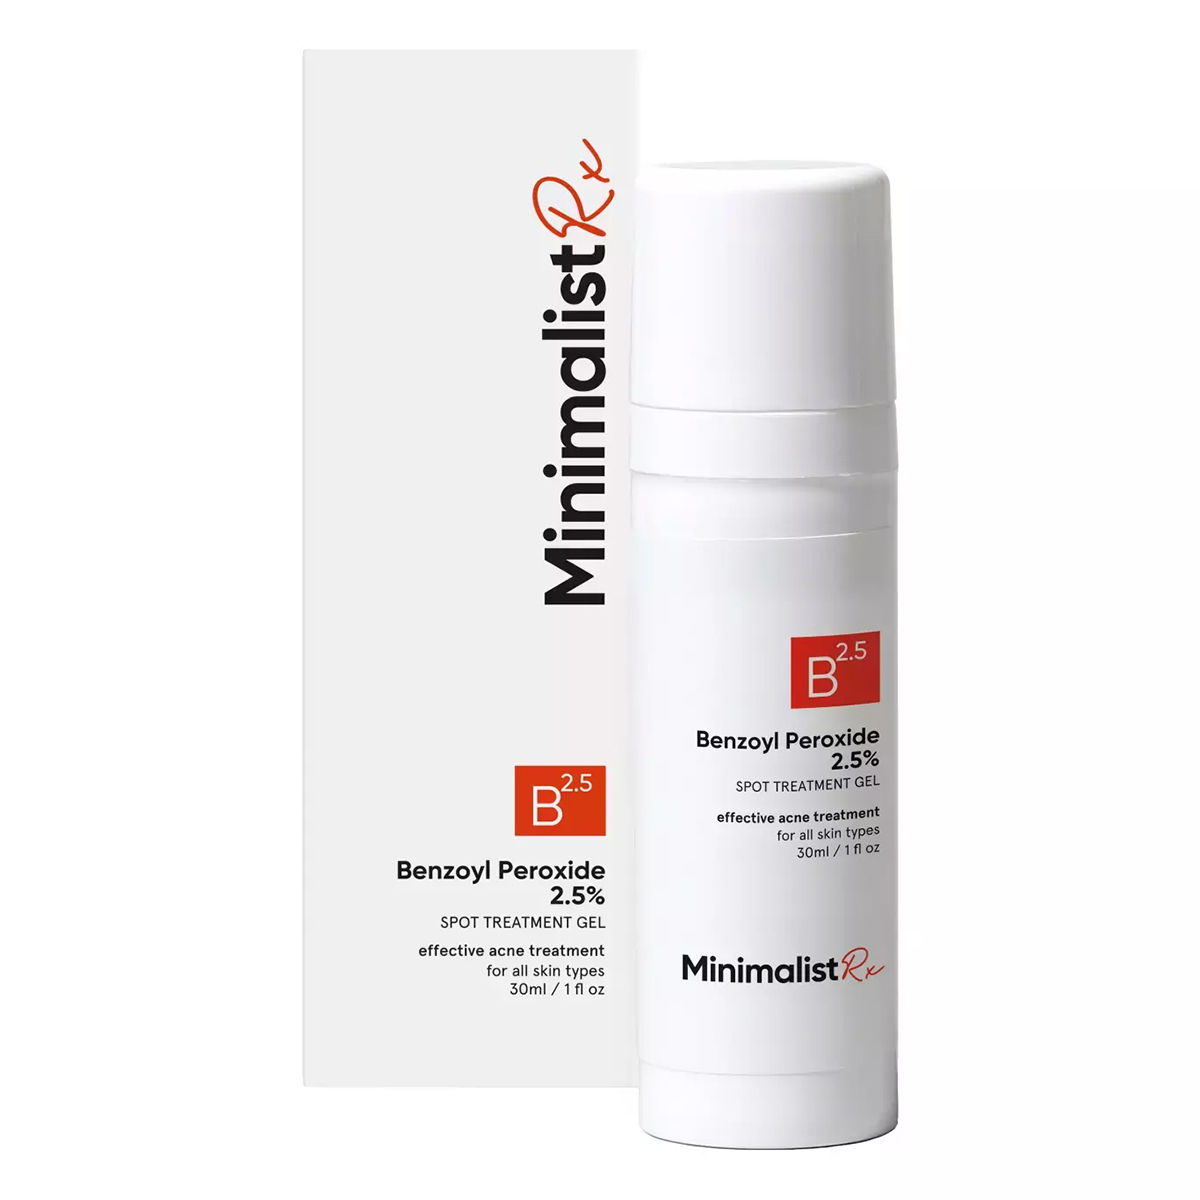 Buy Minimalist Rx Benzoyl Peroxide 2.5% Spot Treatment Gel, 30 ml Online